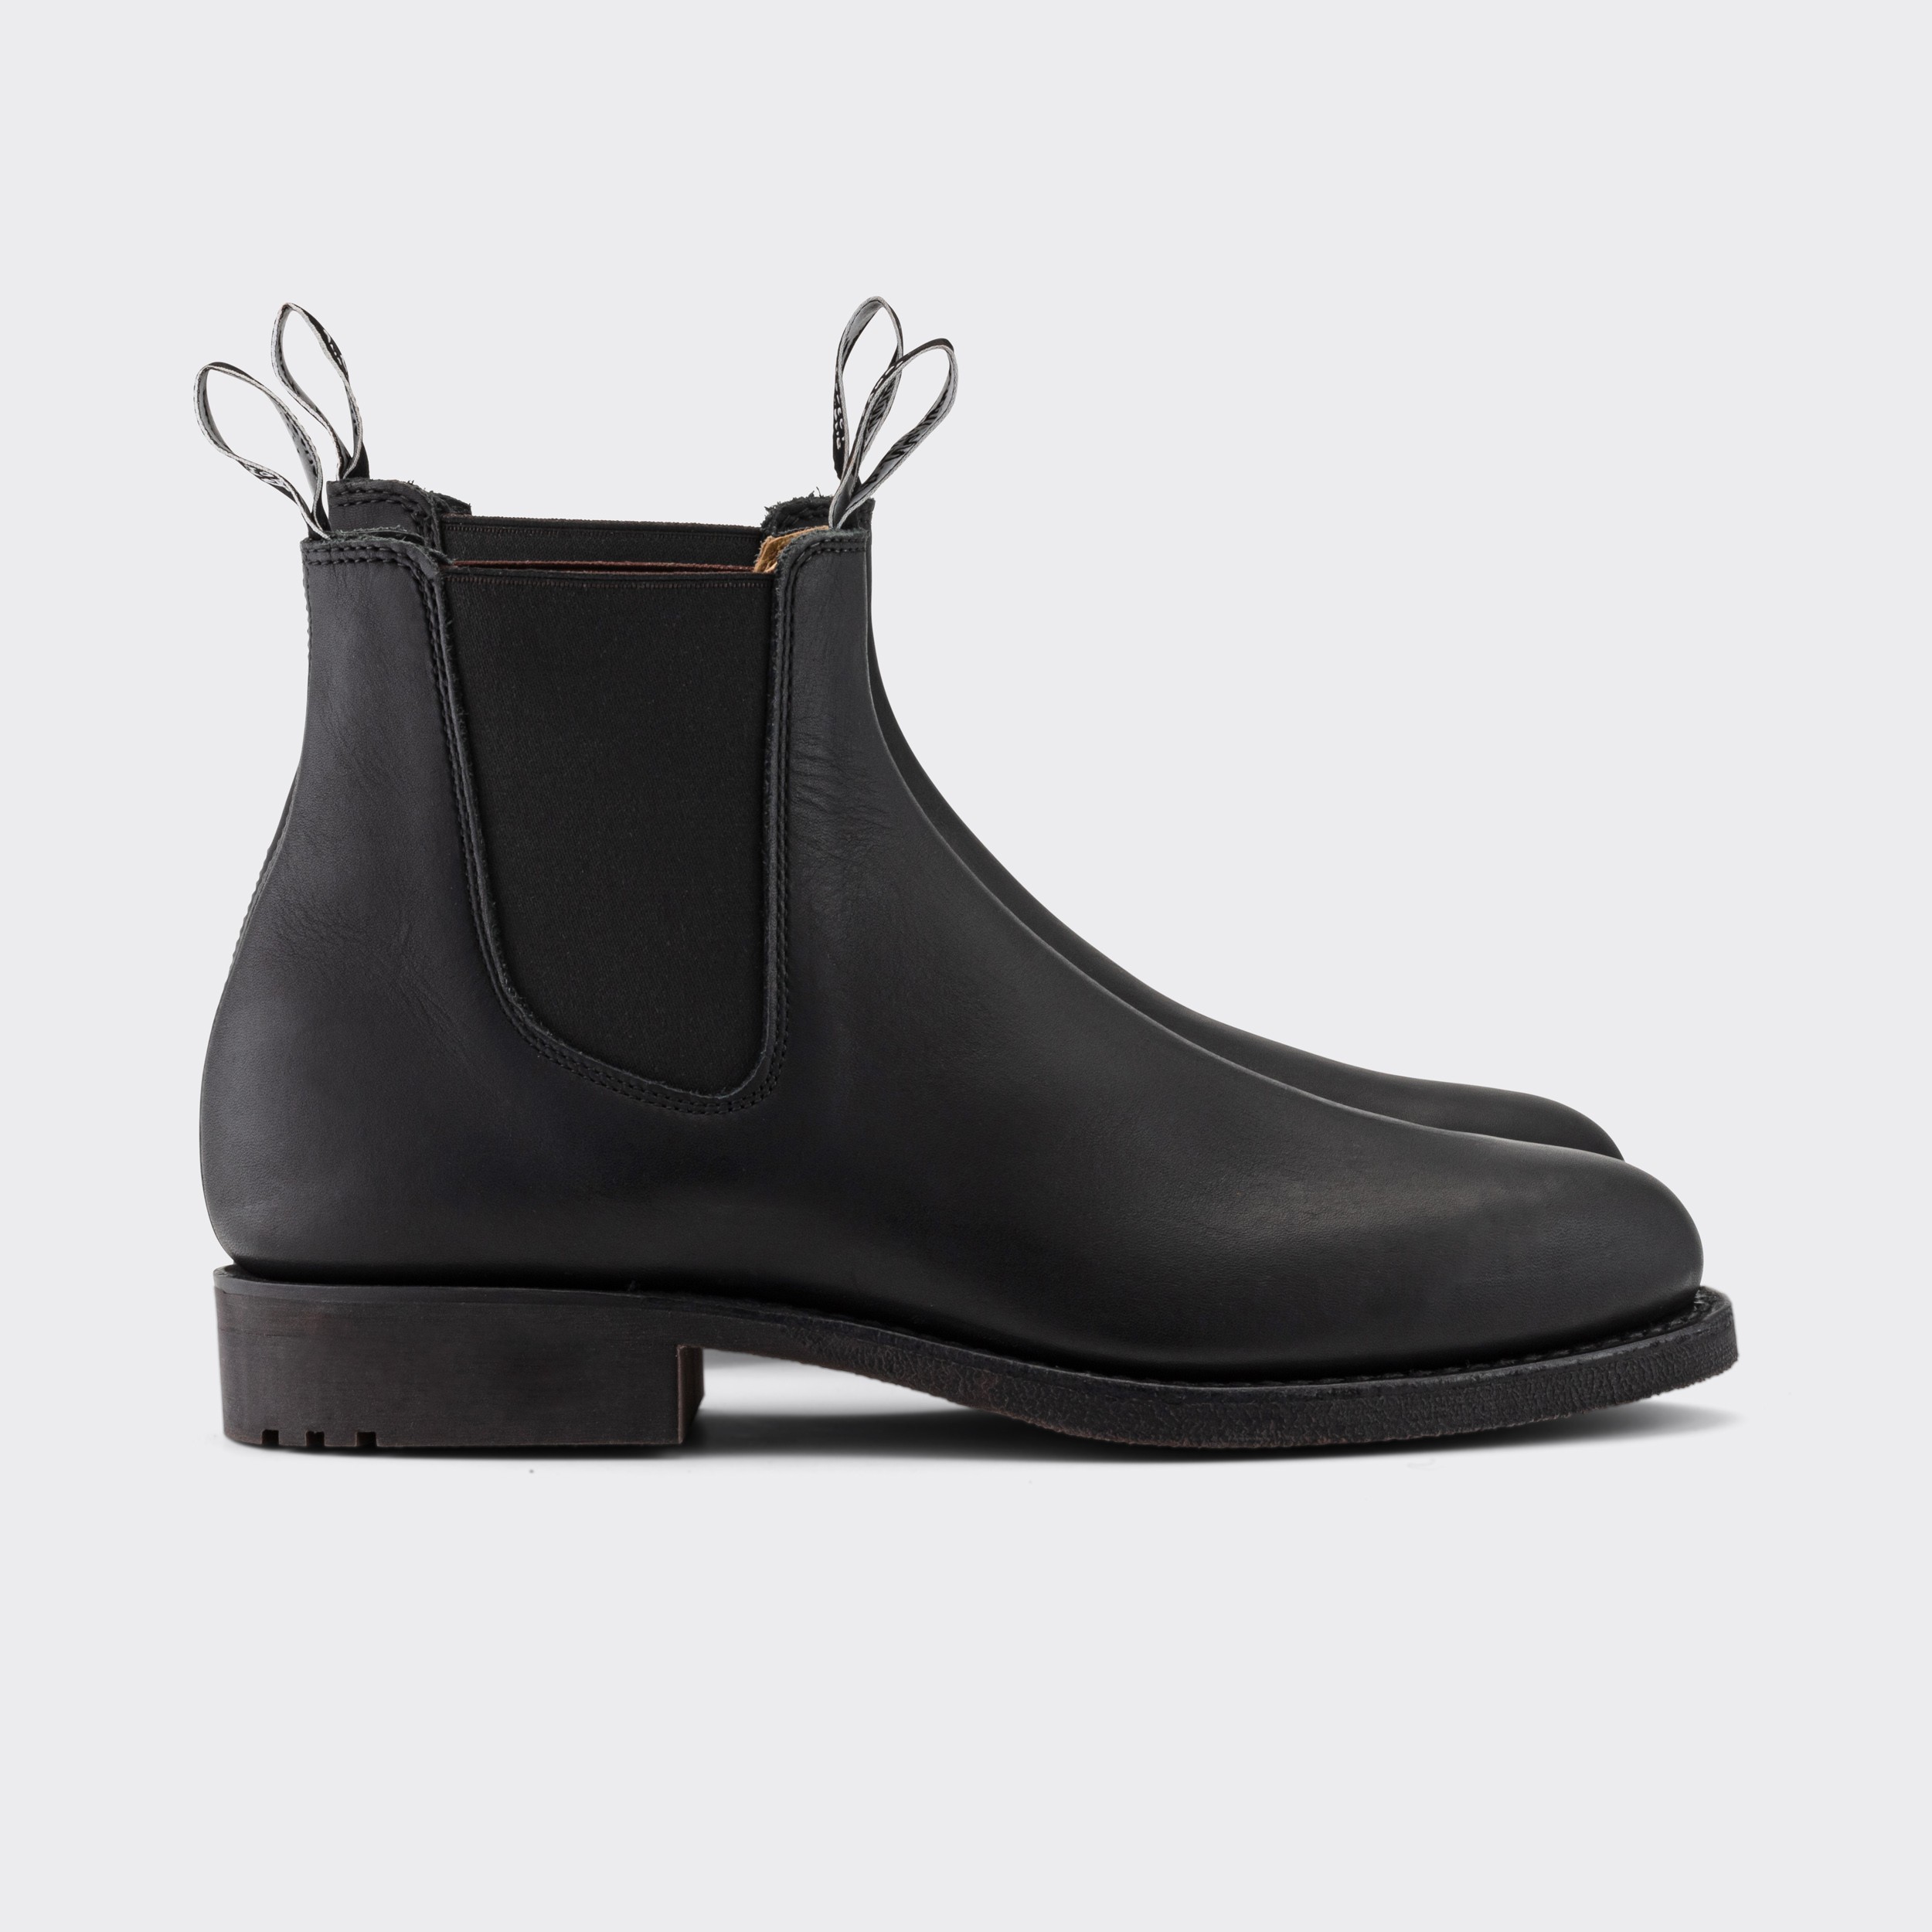 RM Williams Gardener Black Leather Chelsea Boots Mens Size AUS/UK